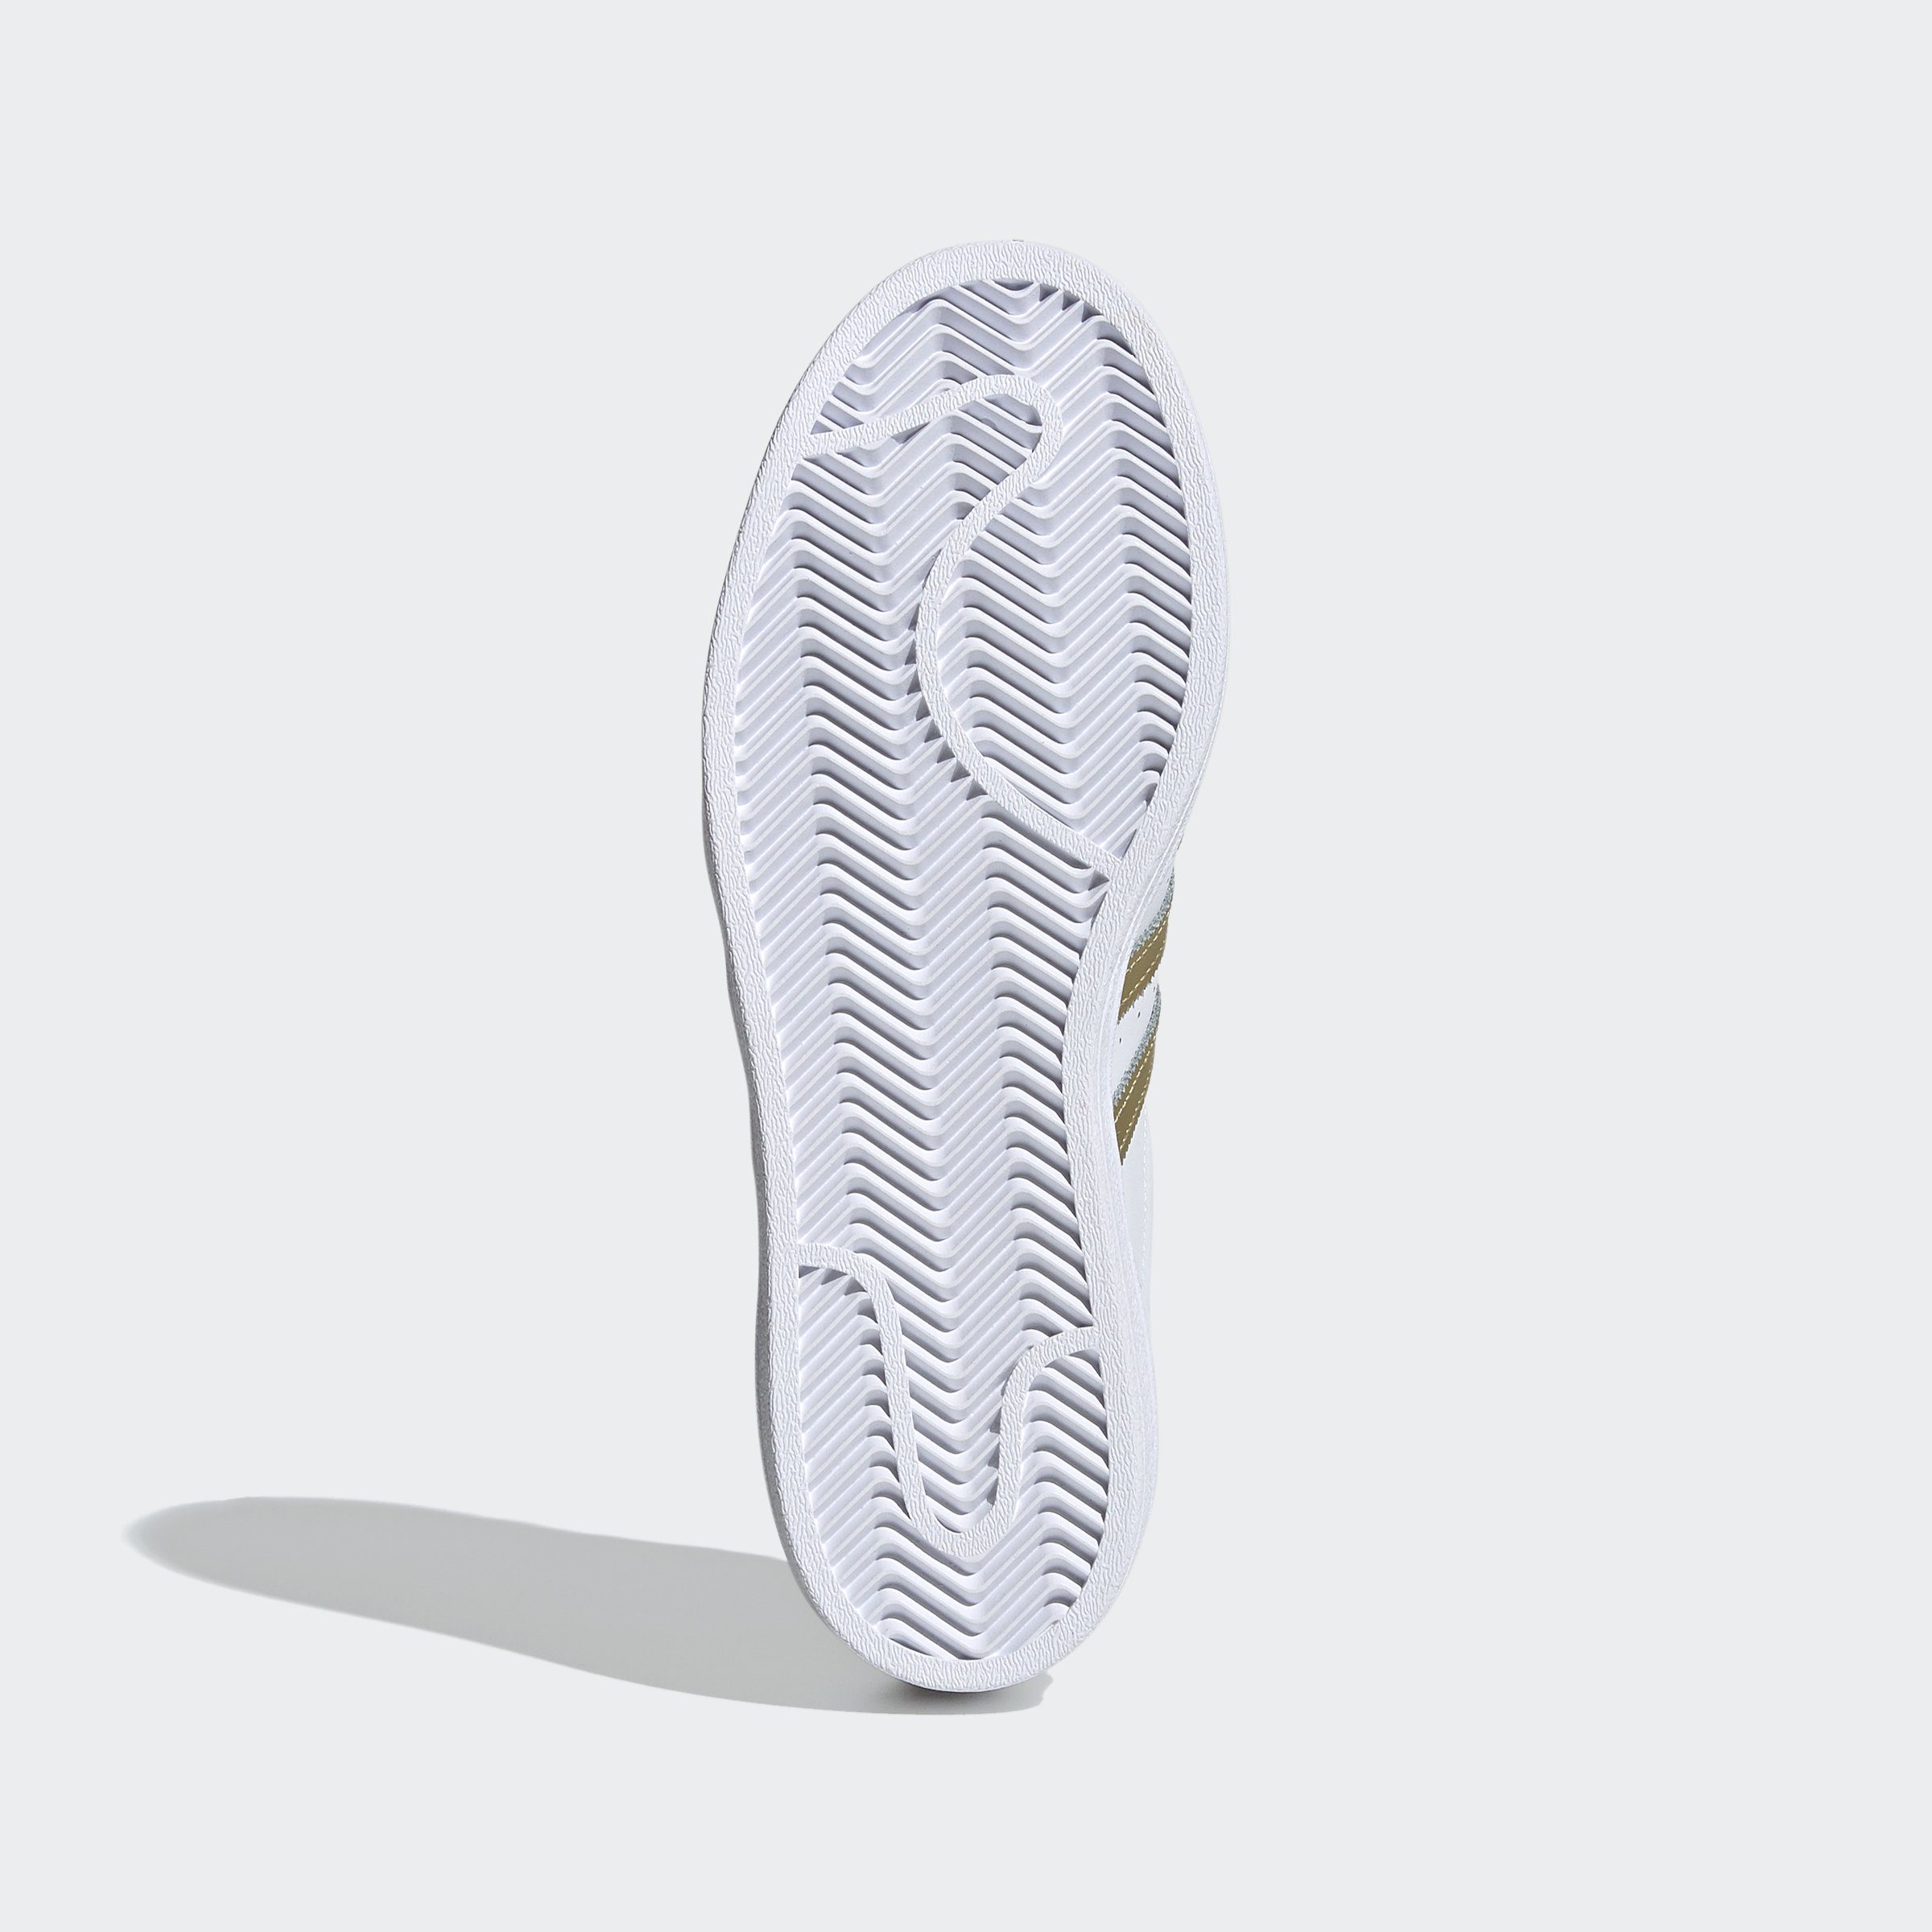 Gold Cloud SUPERSTAR / adidas Originals / Metallic Cloud Sneaker White White